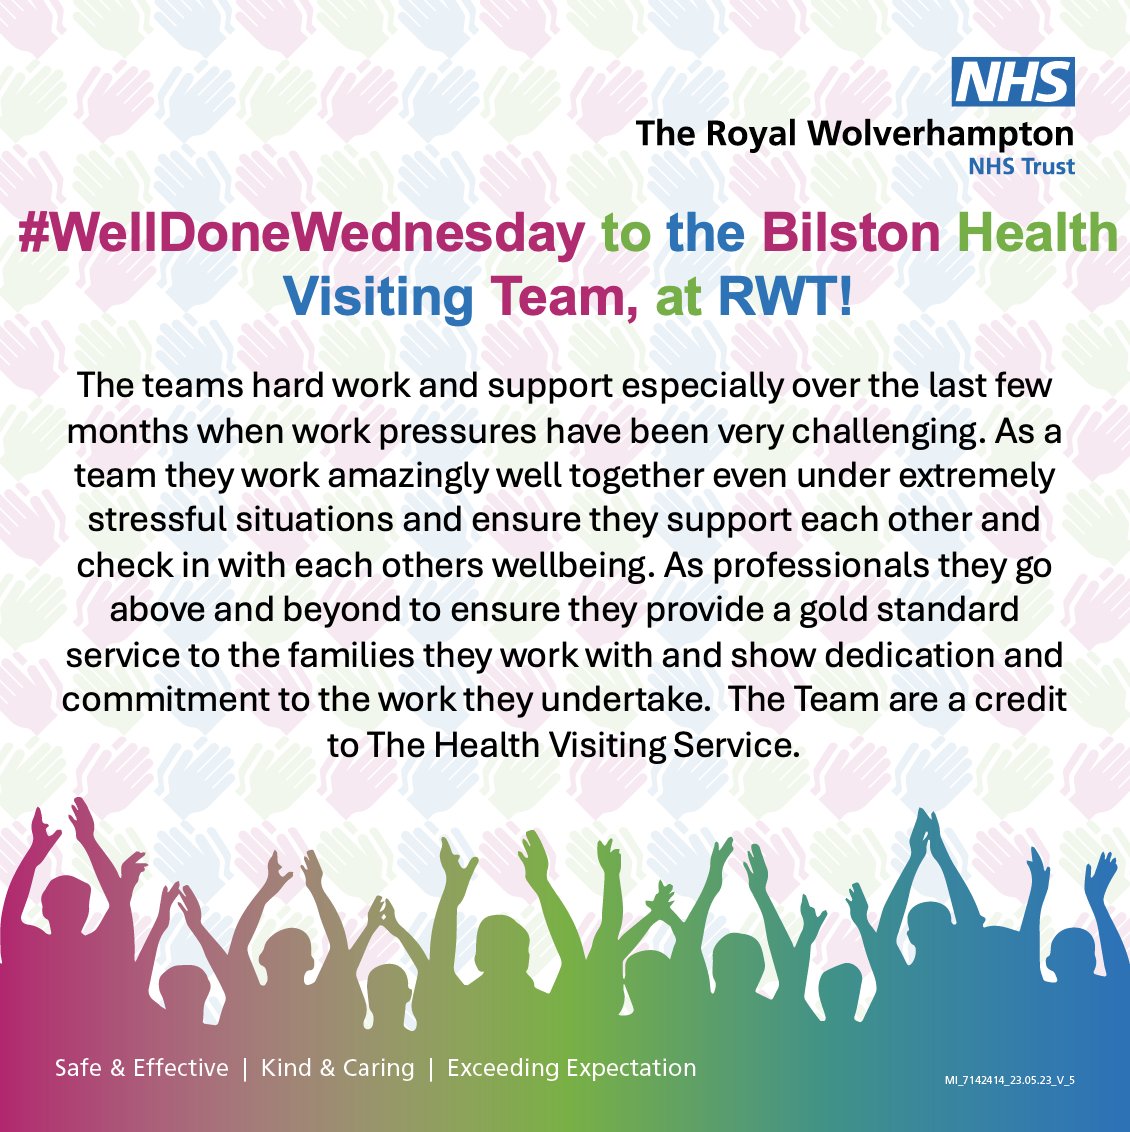 #WellDoneWednesday to the Bilston Health Visiting Team 😃